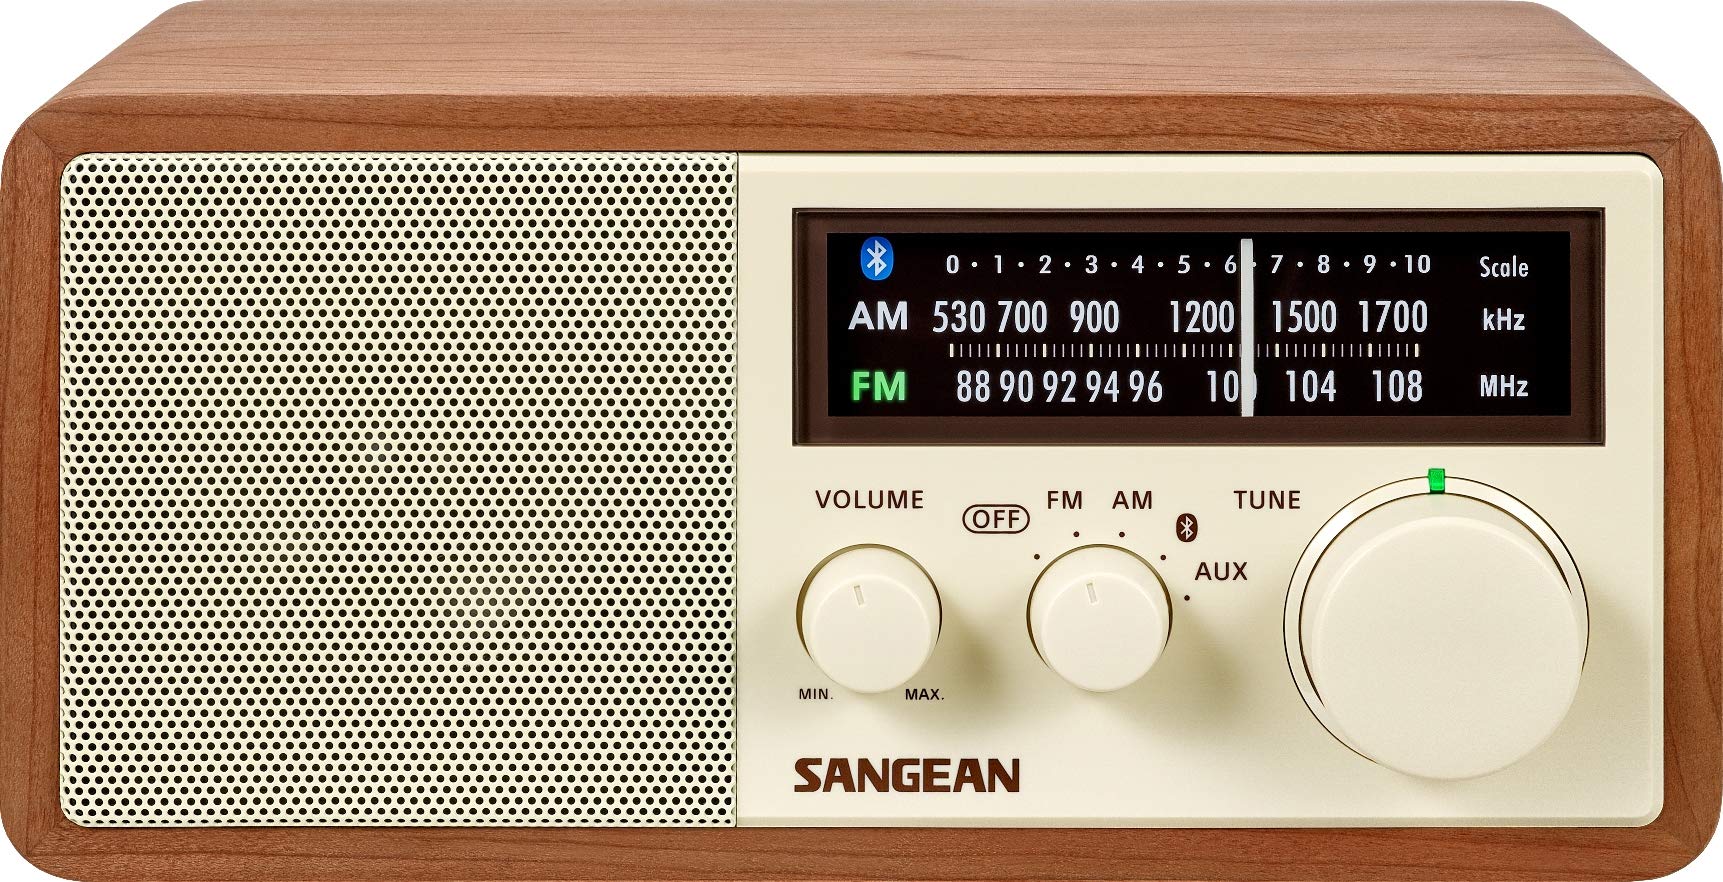 Sangean AM/FM/蓝牙木柜收音机，带 USB 手机充电功能